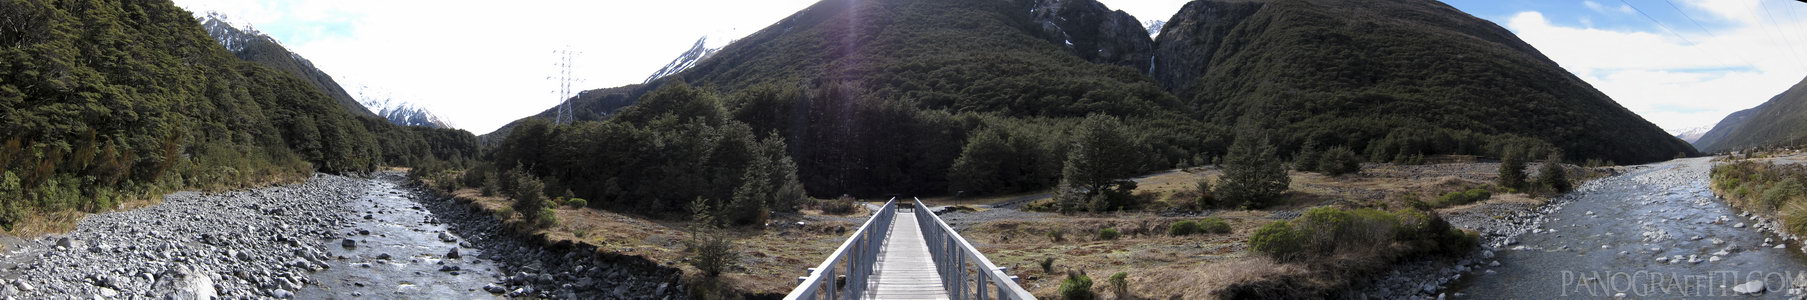 Bridge Over The Devil's Punchbowl - Arthur's Pass National Park, Canterbury, New Zealand